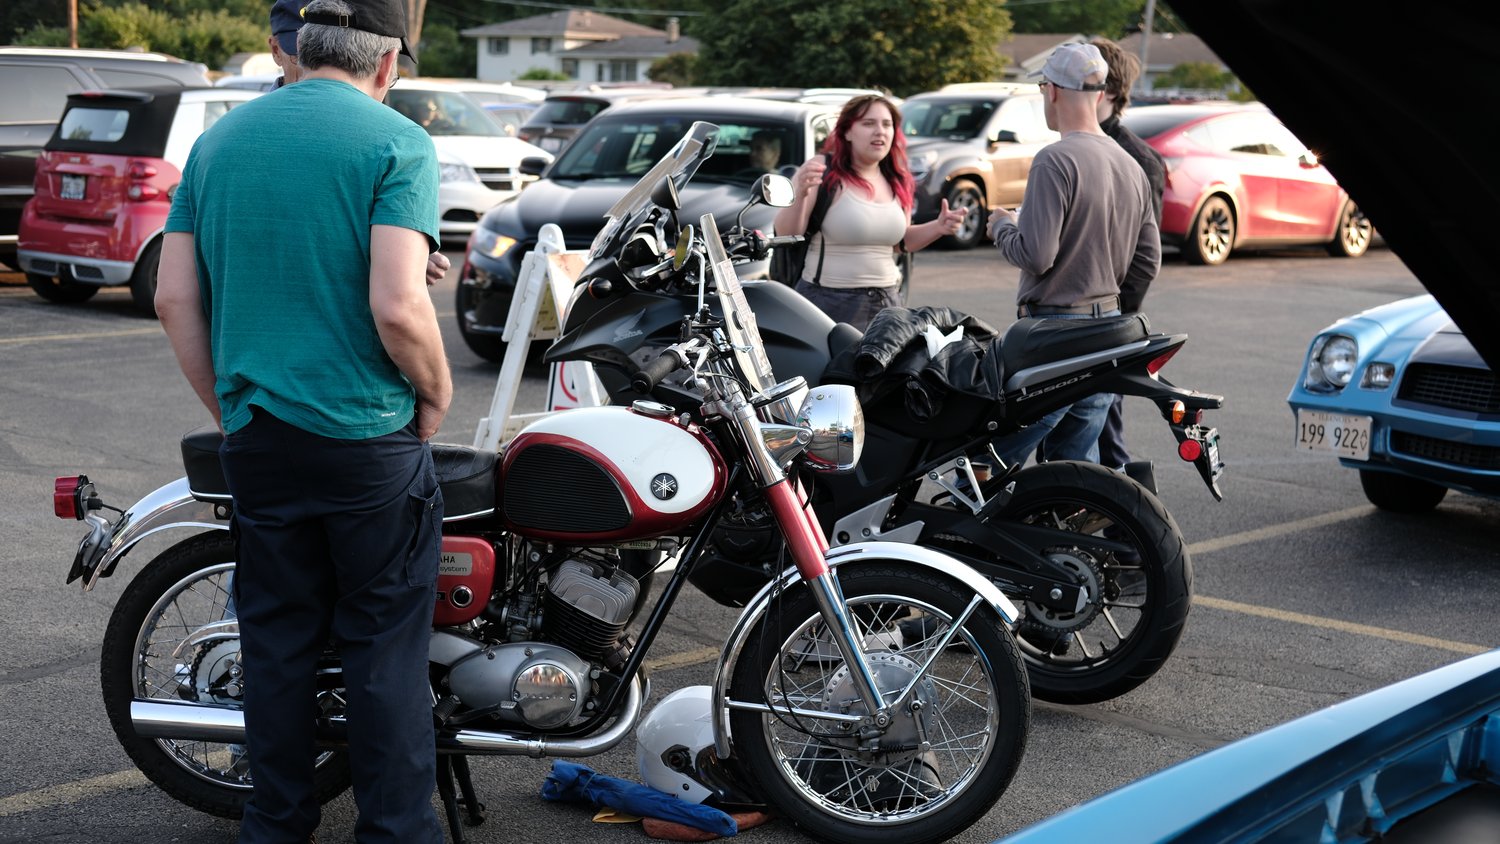 Motorcycles at the car show.